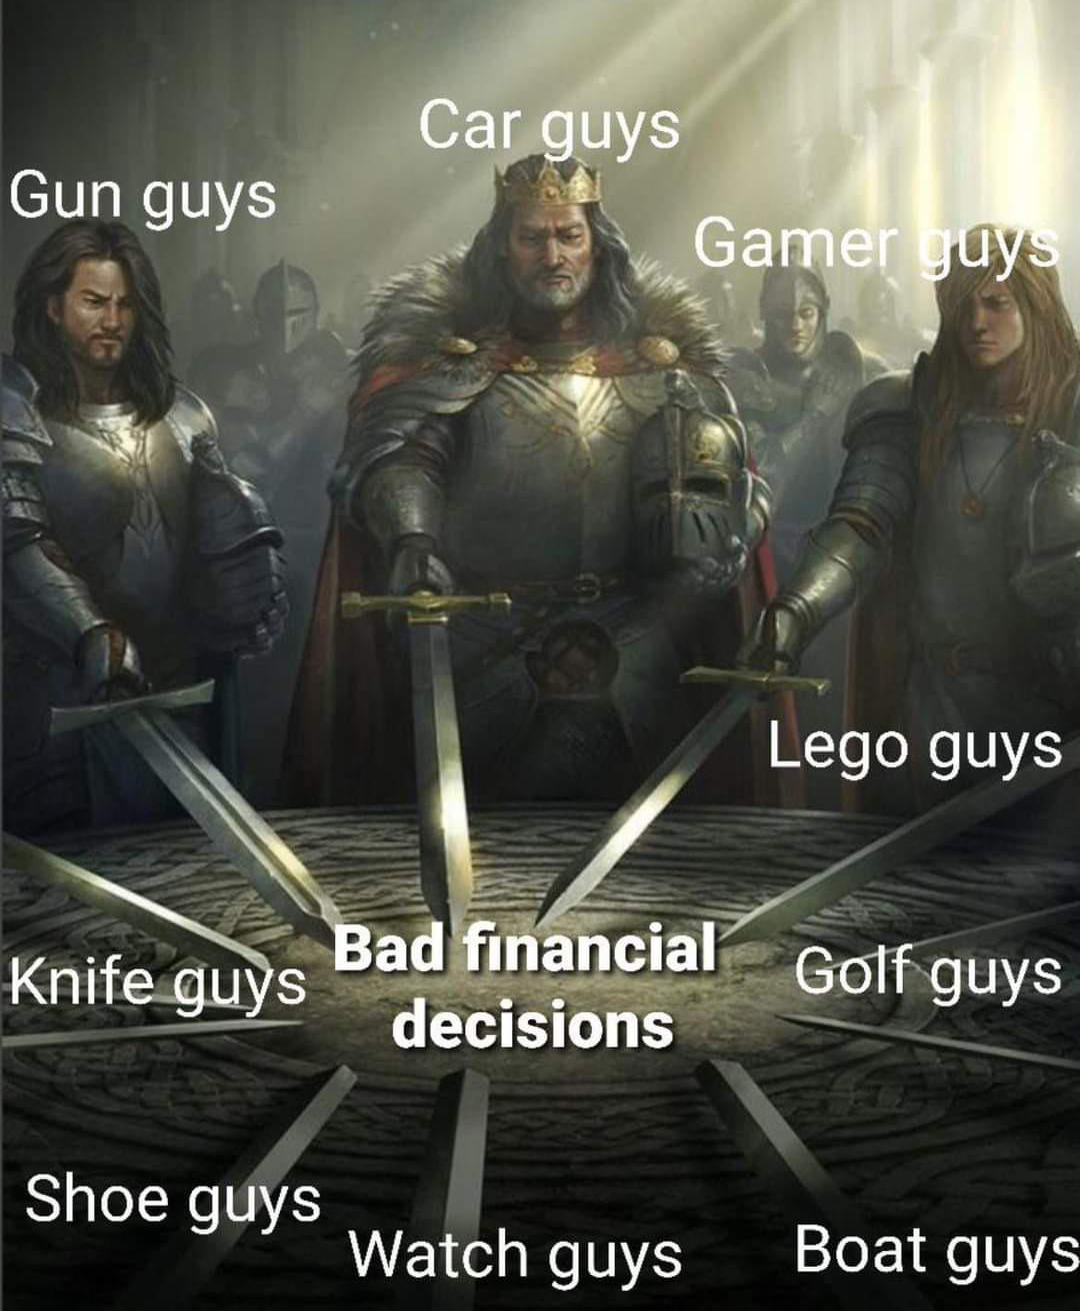 Funny memes - Gun guys Car guys Gamer guys Lego guys Knife guys Bad financial decisions Golf guys Shoe guys Watch guys Boat guys